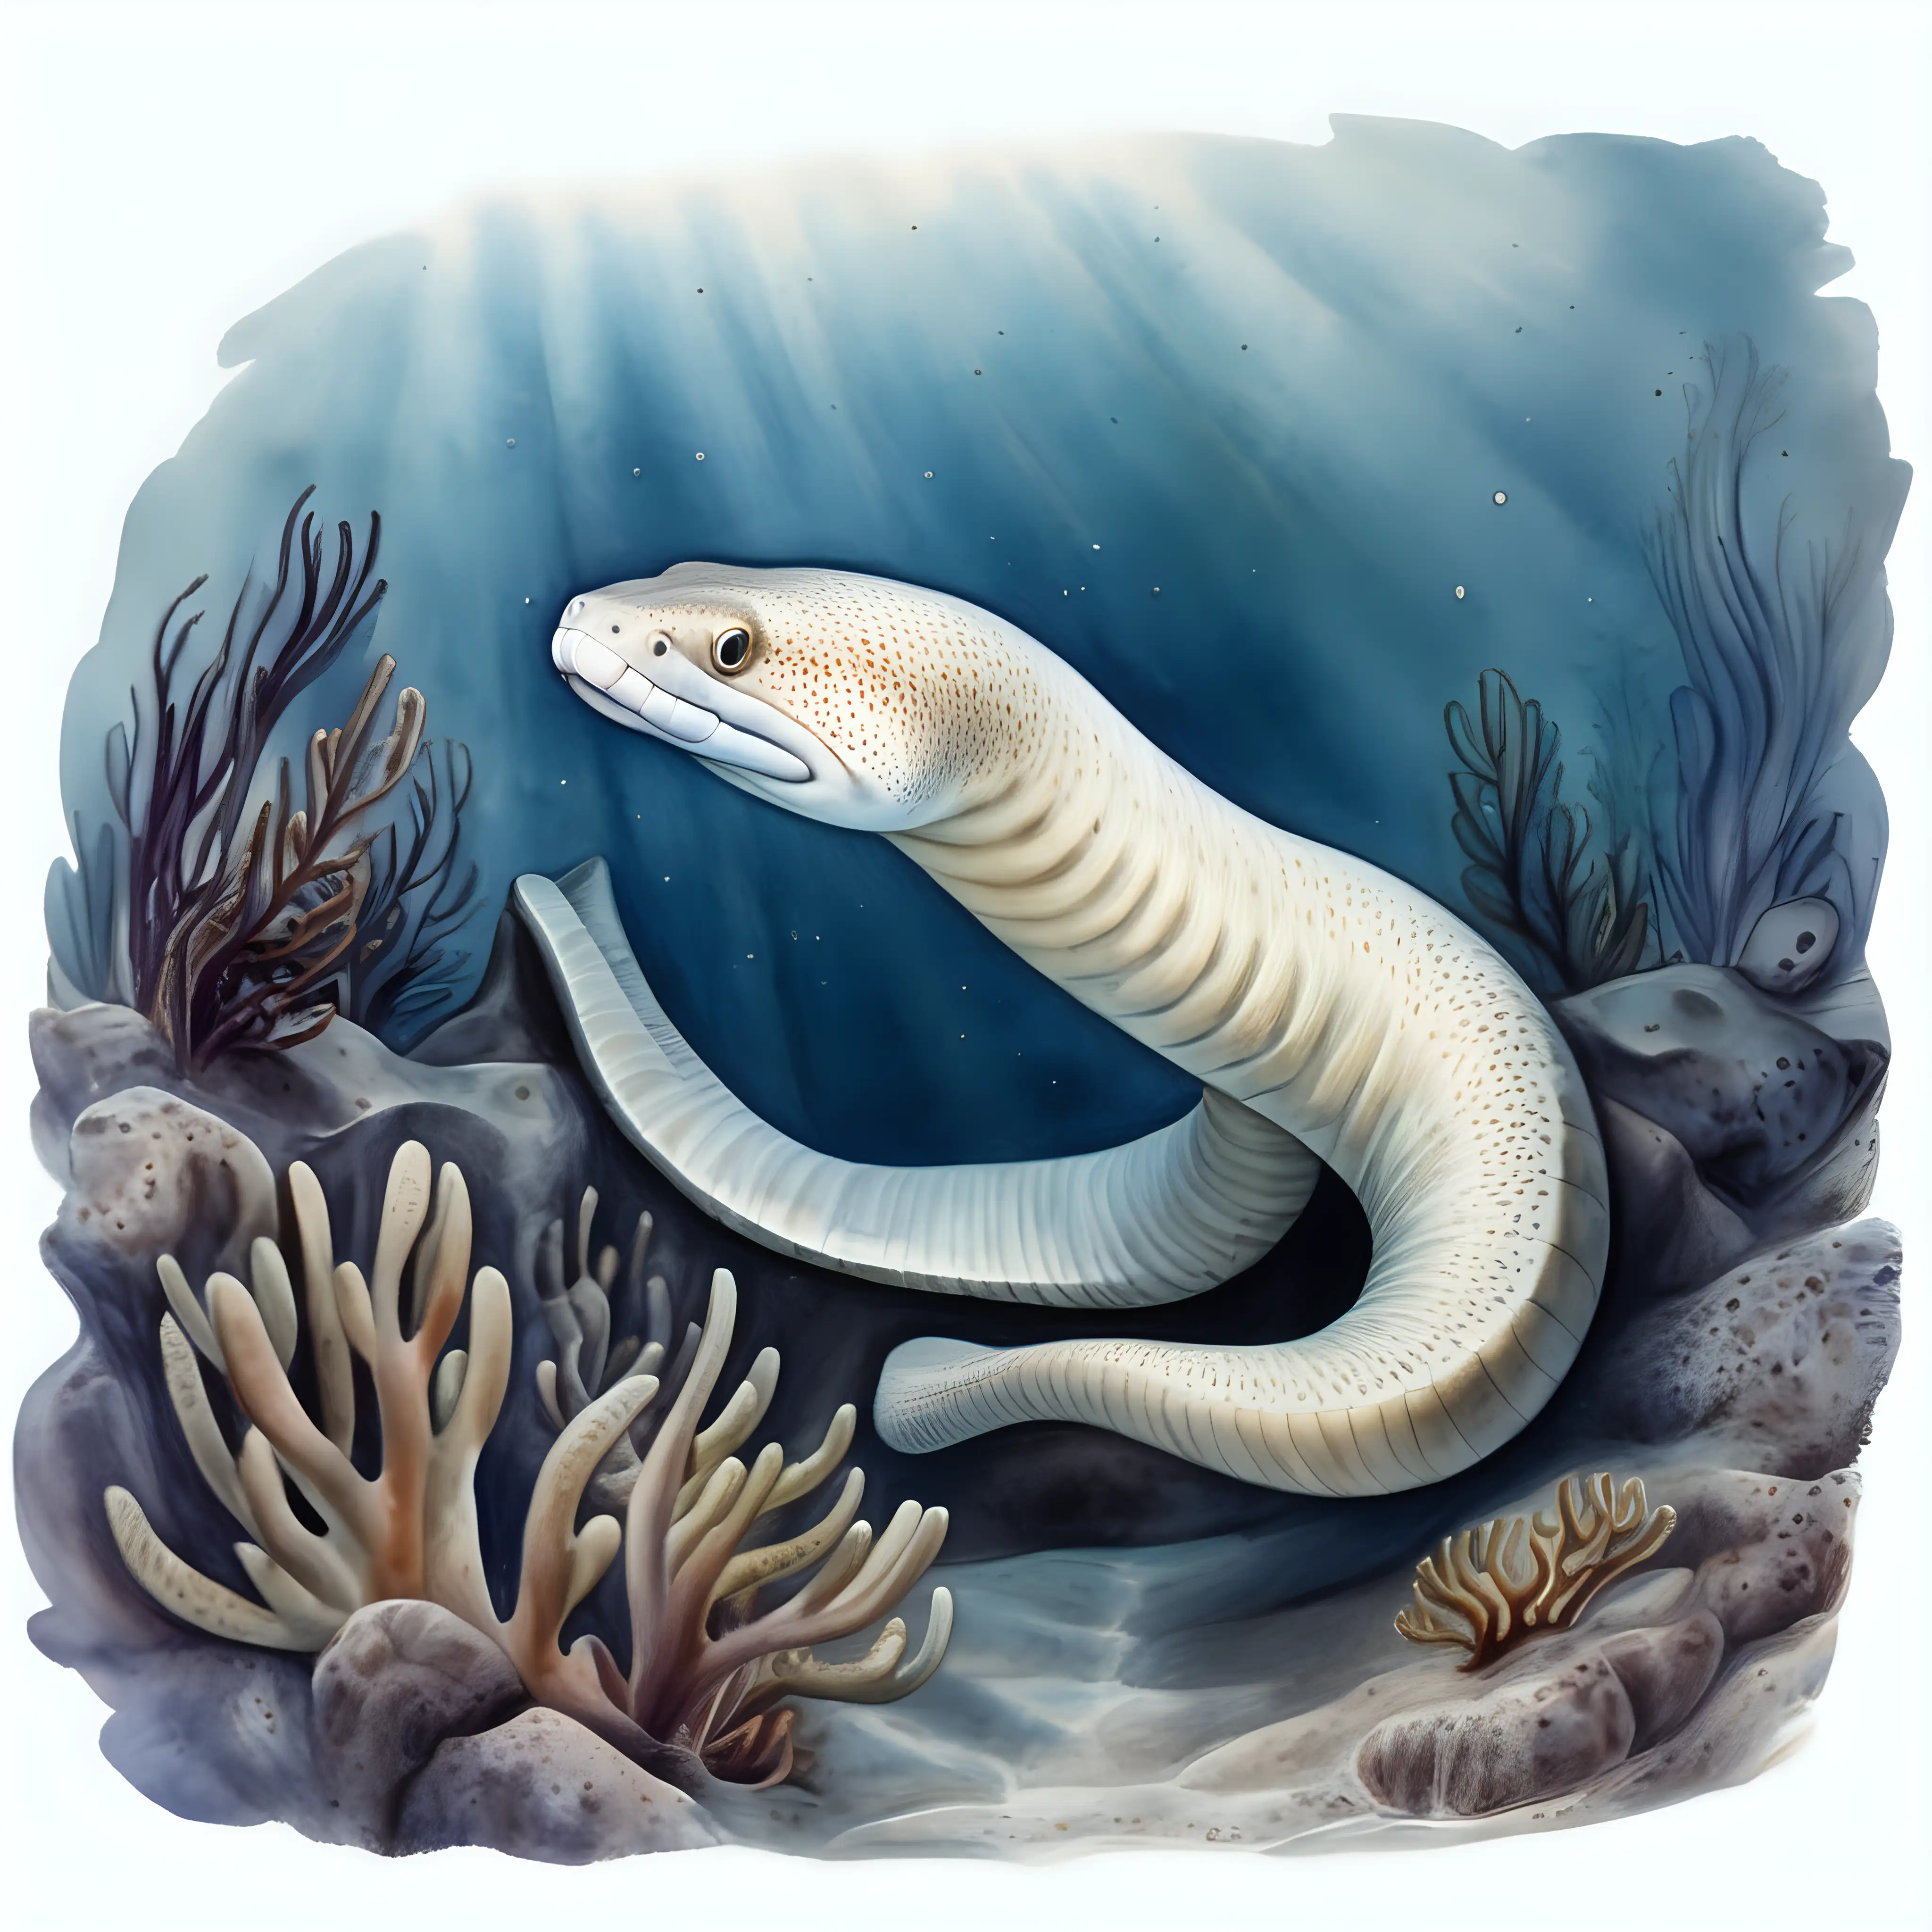 Graceful White Moray Eel in Dark Watercolor